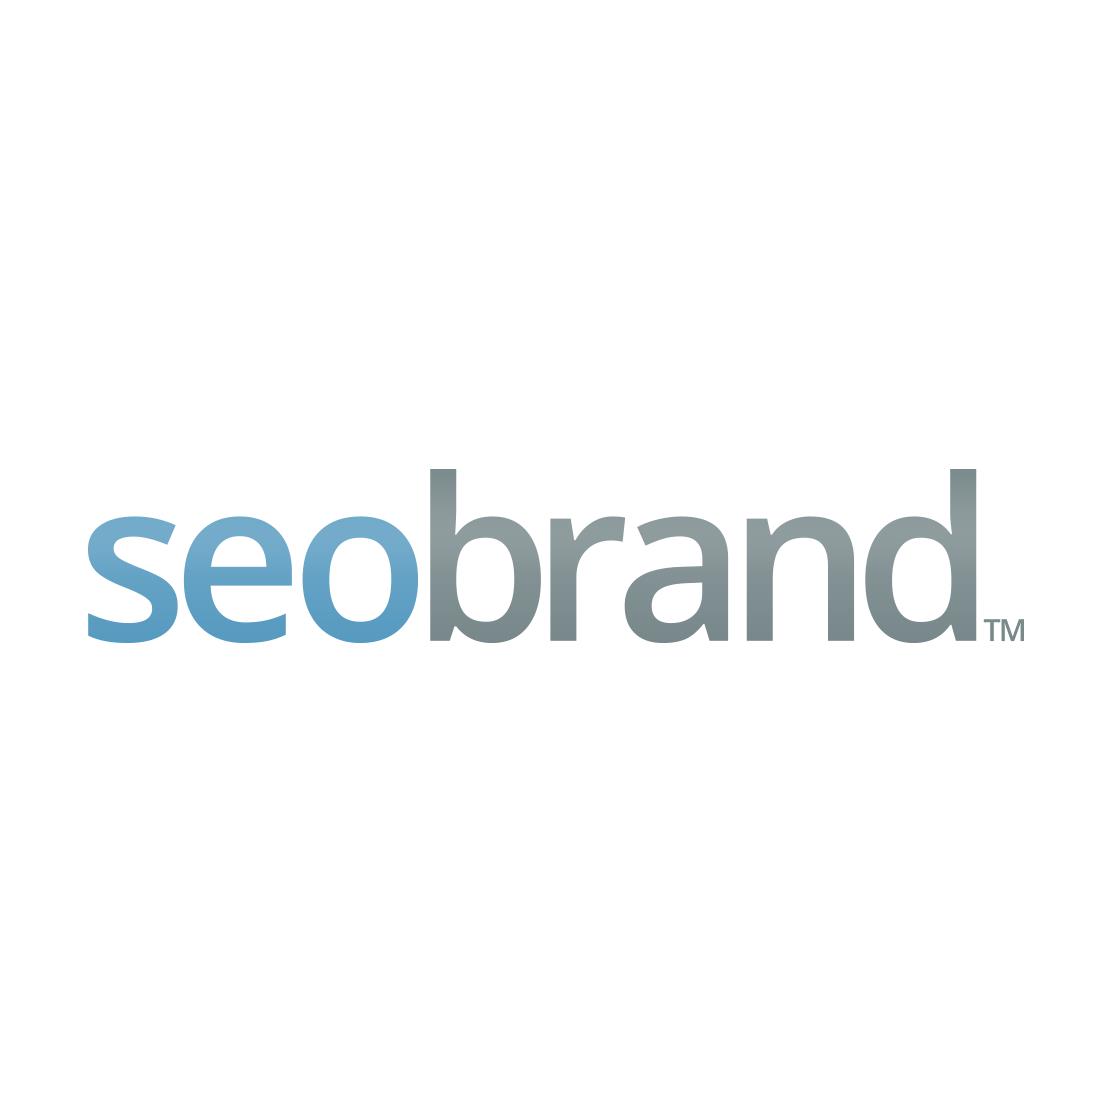 Top Search Engine Optimization Business Logo: SEO Brand